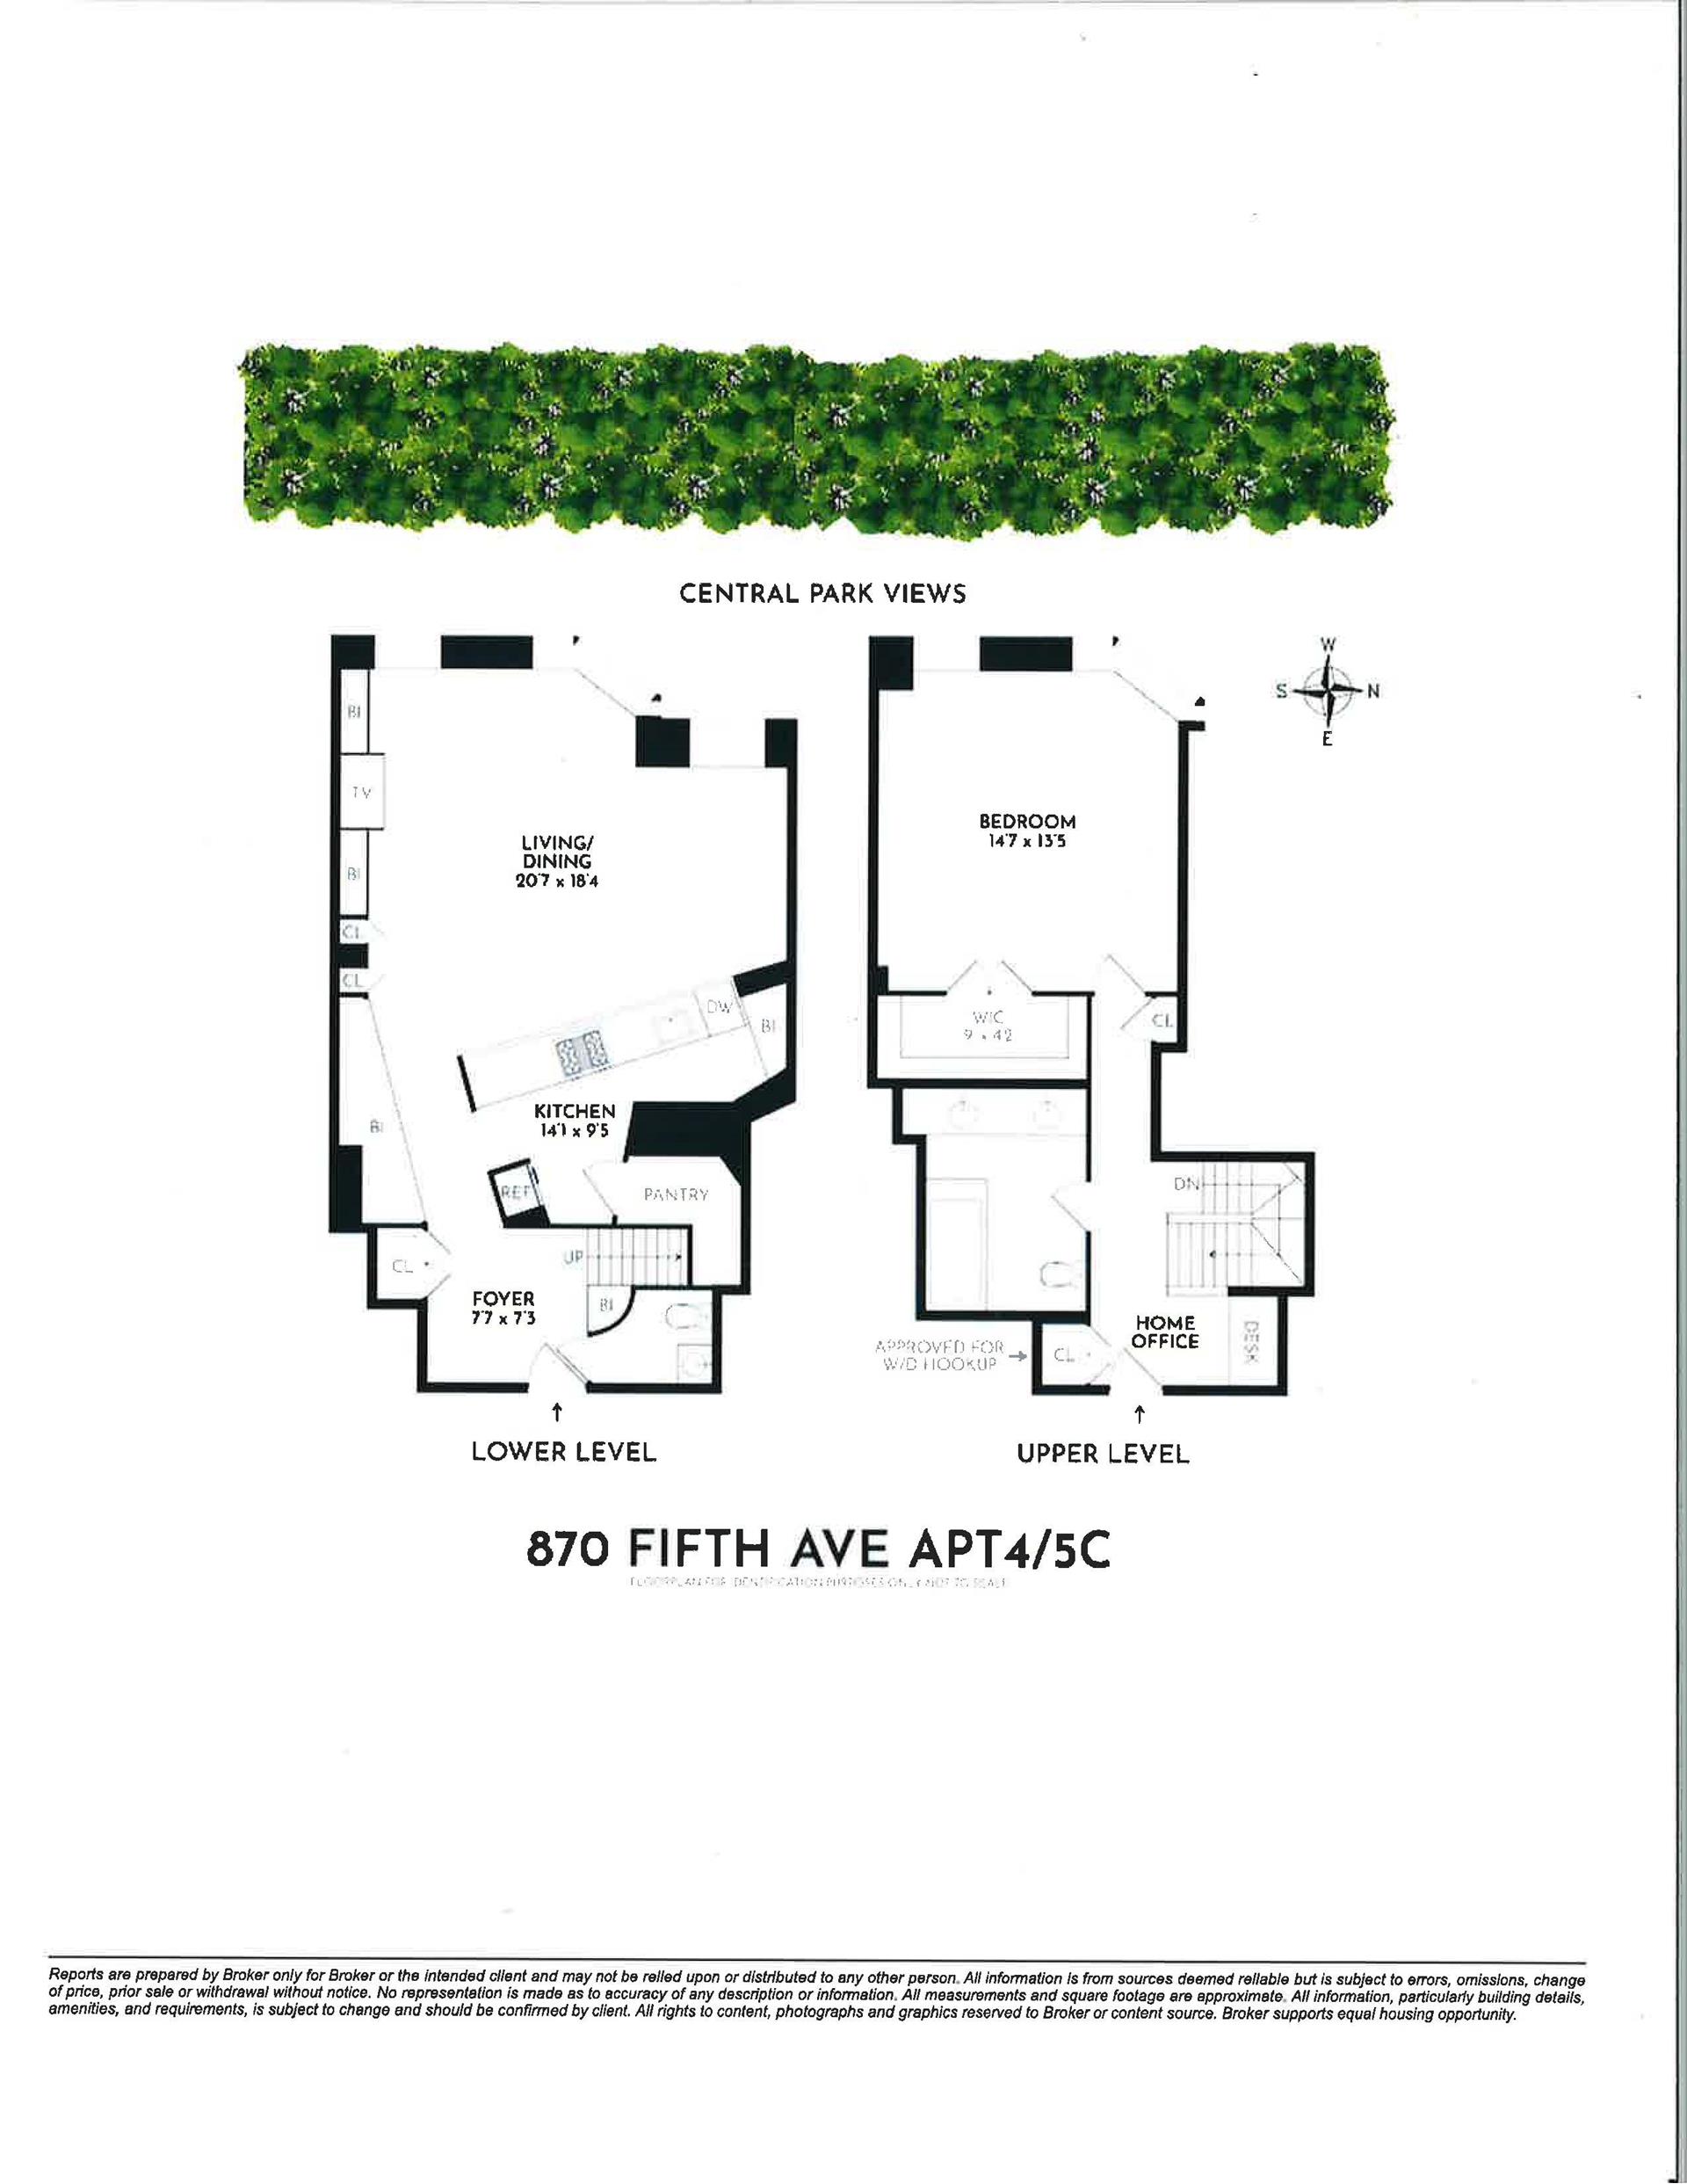 Floorplan for 870 5th Avenue, 4/5C